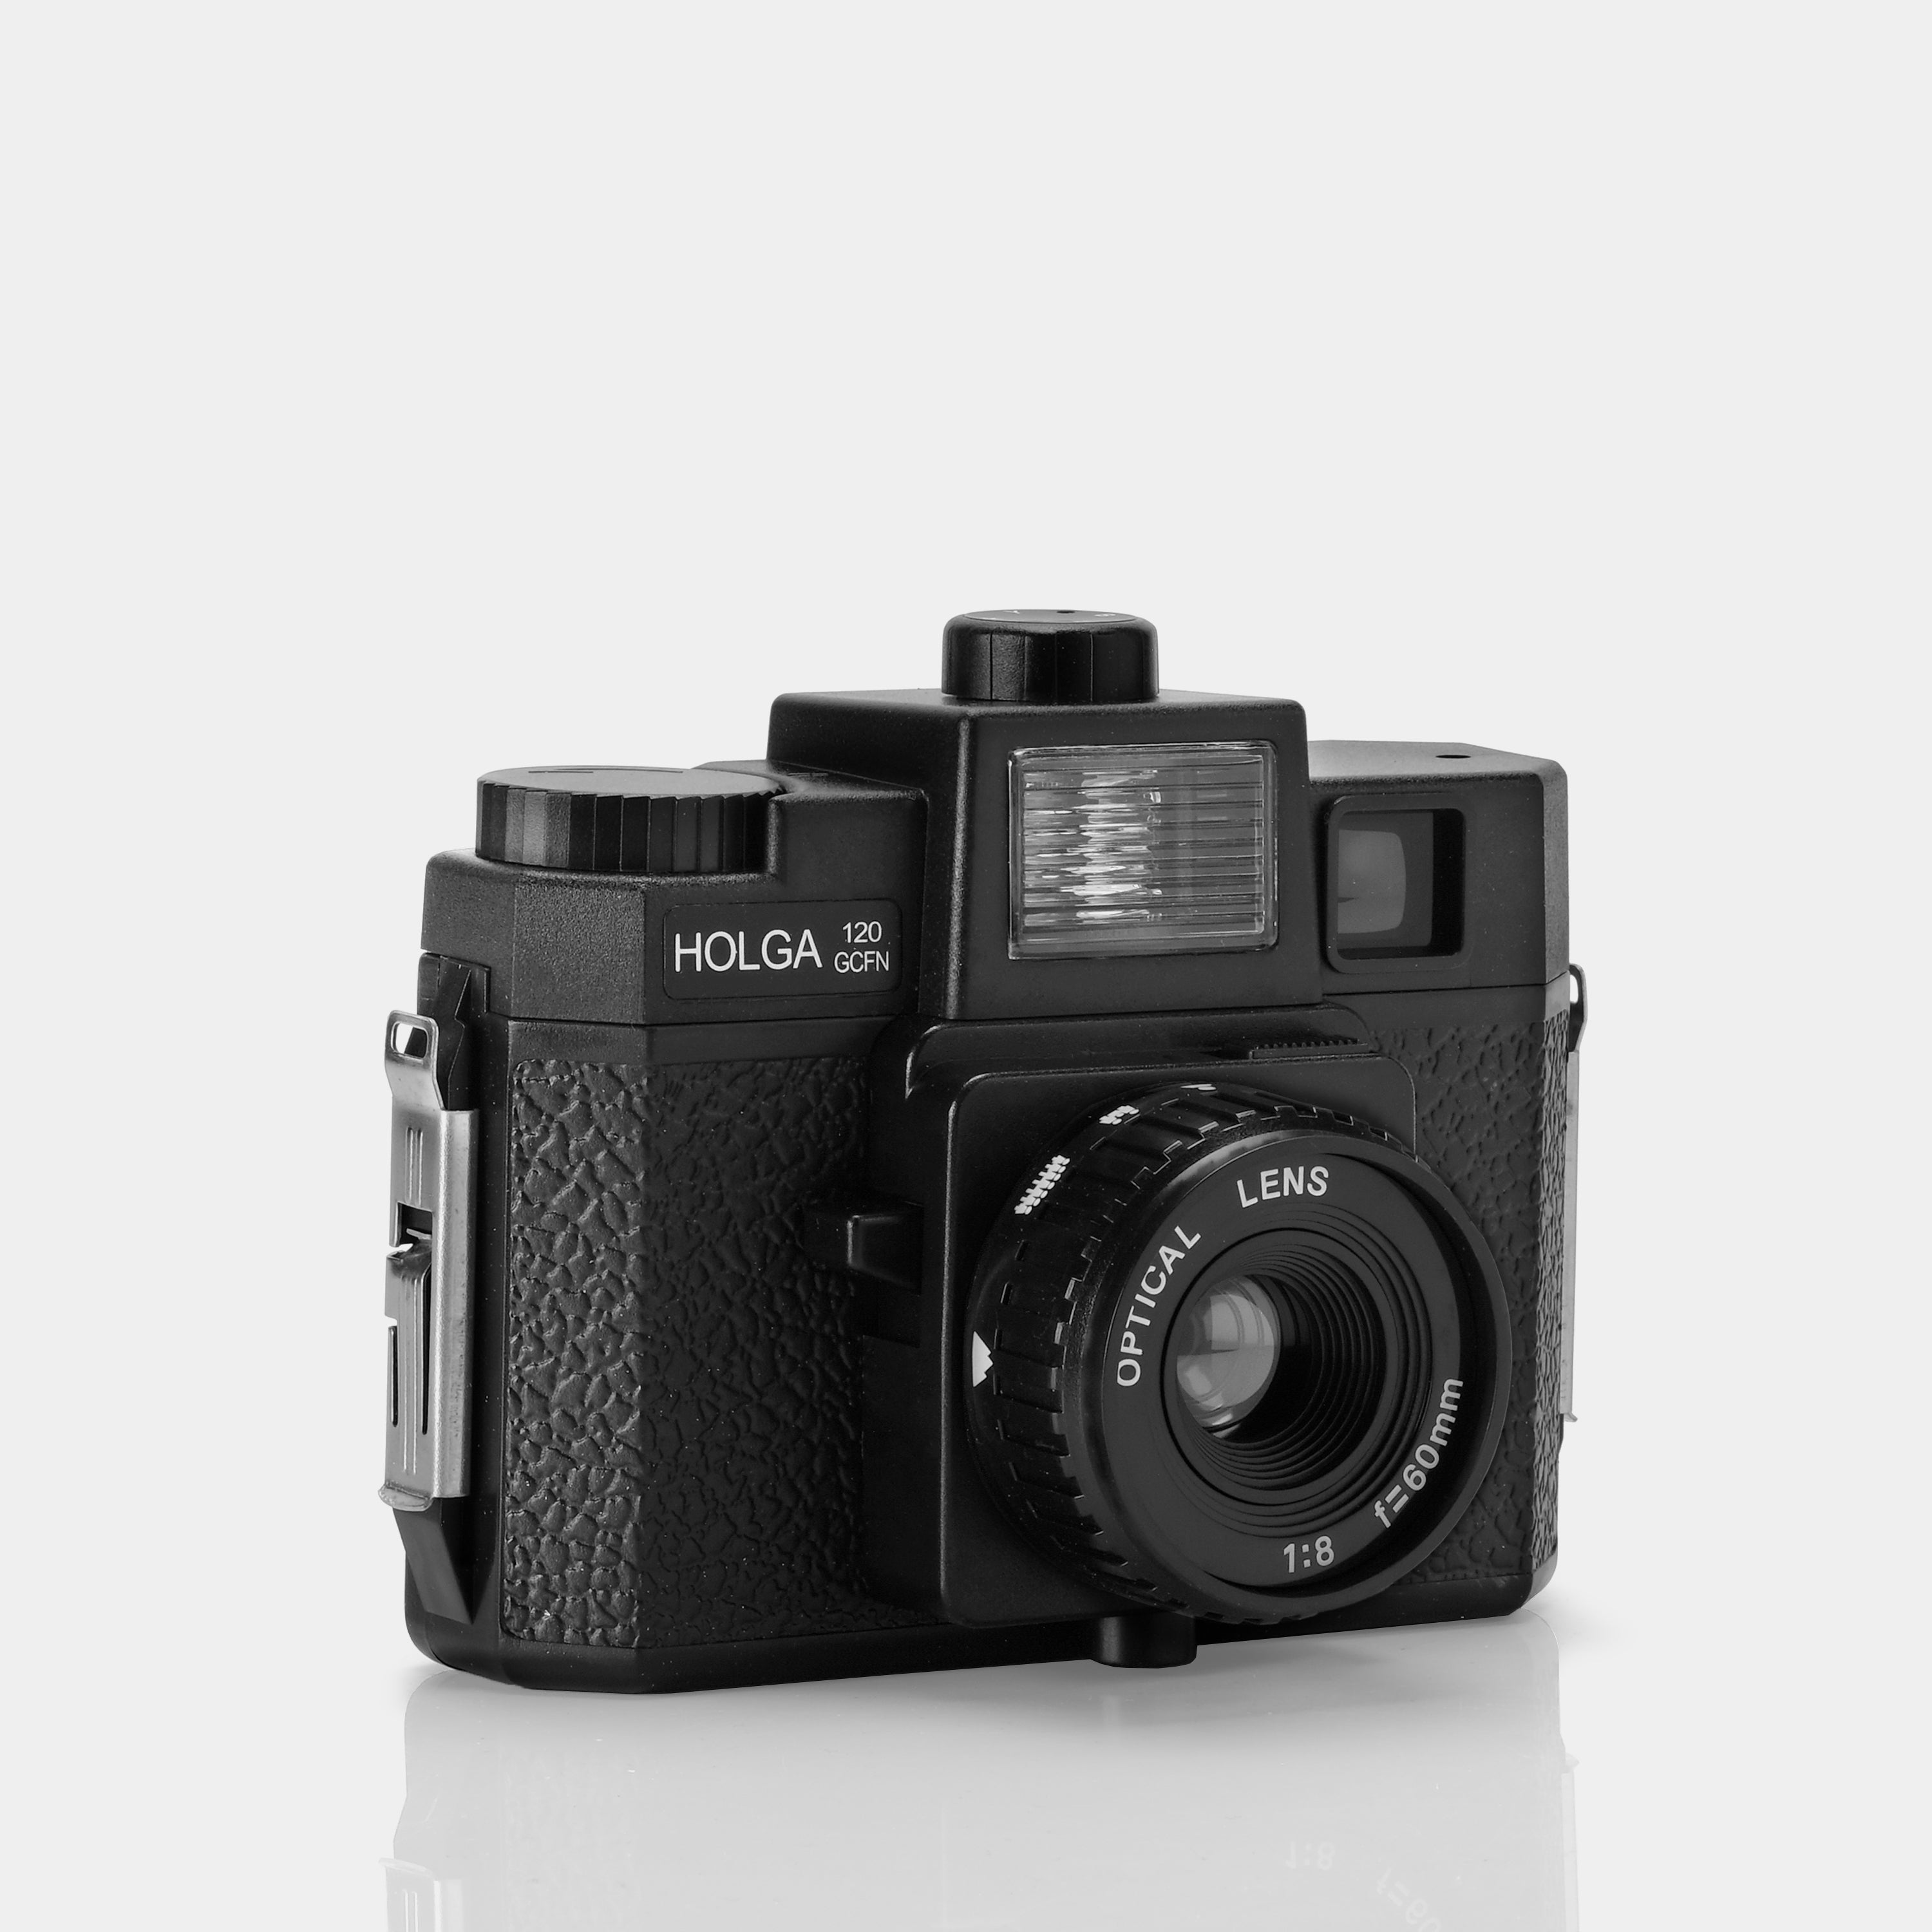 Holga 120 GCFN Black 120 Film Camera with Flash